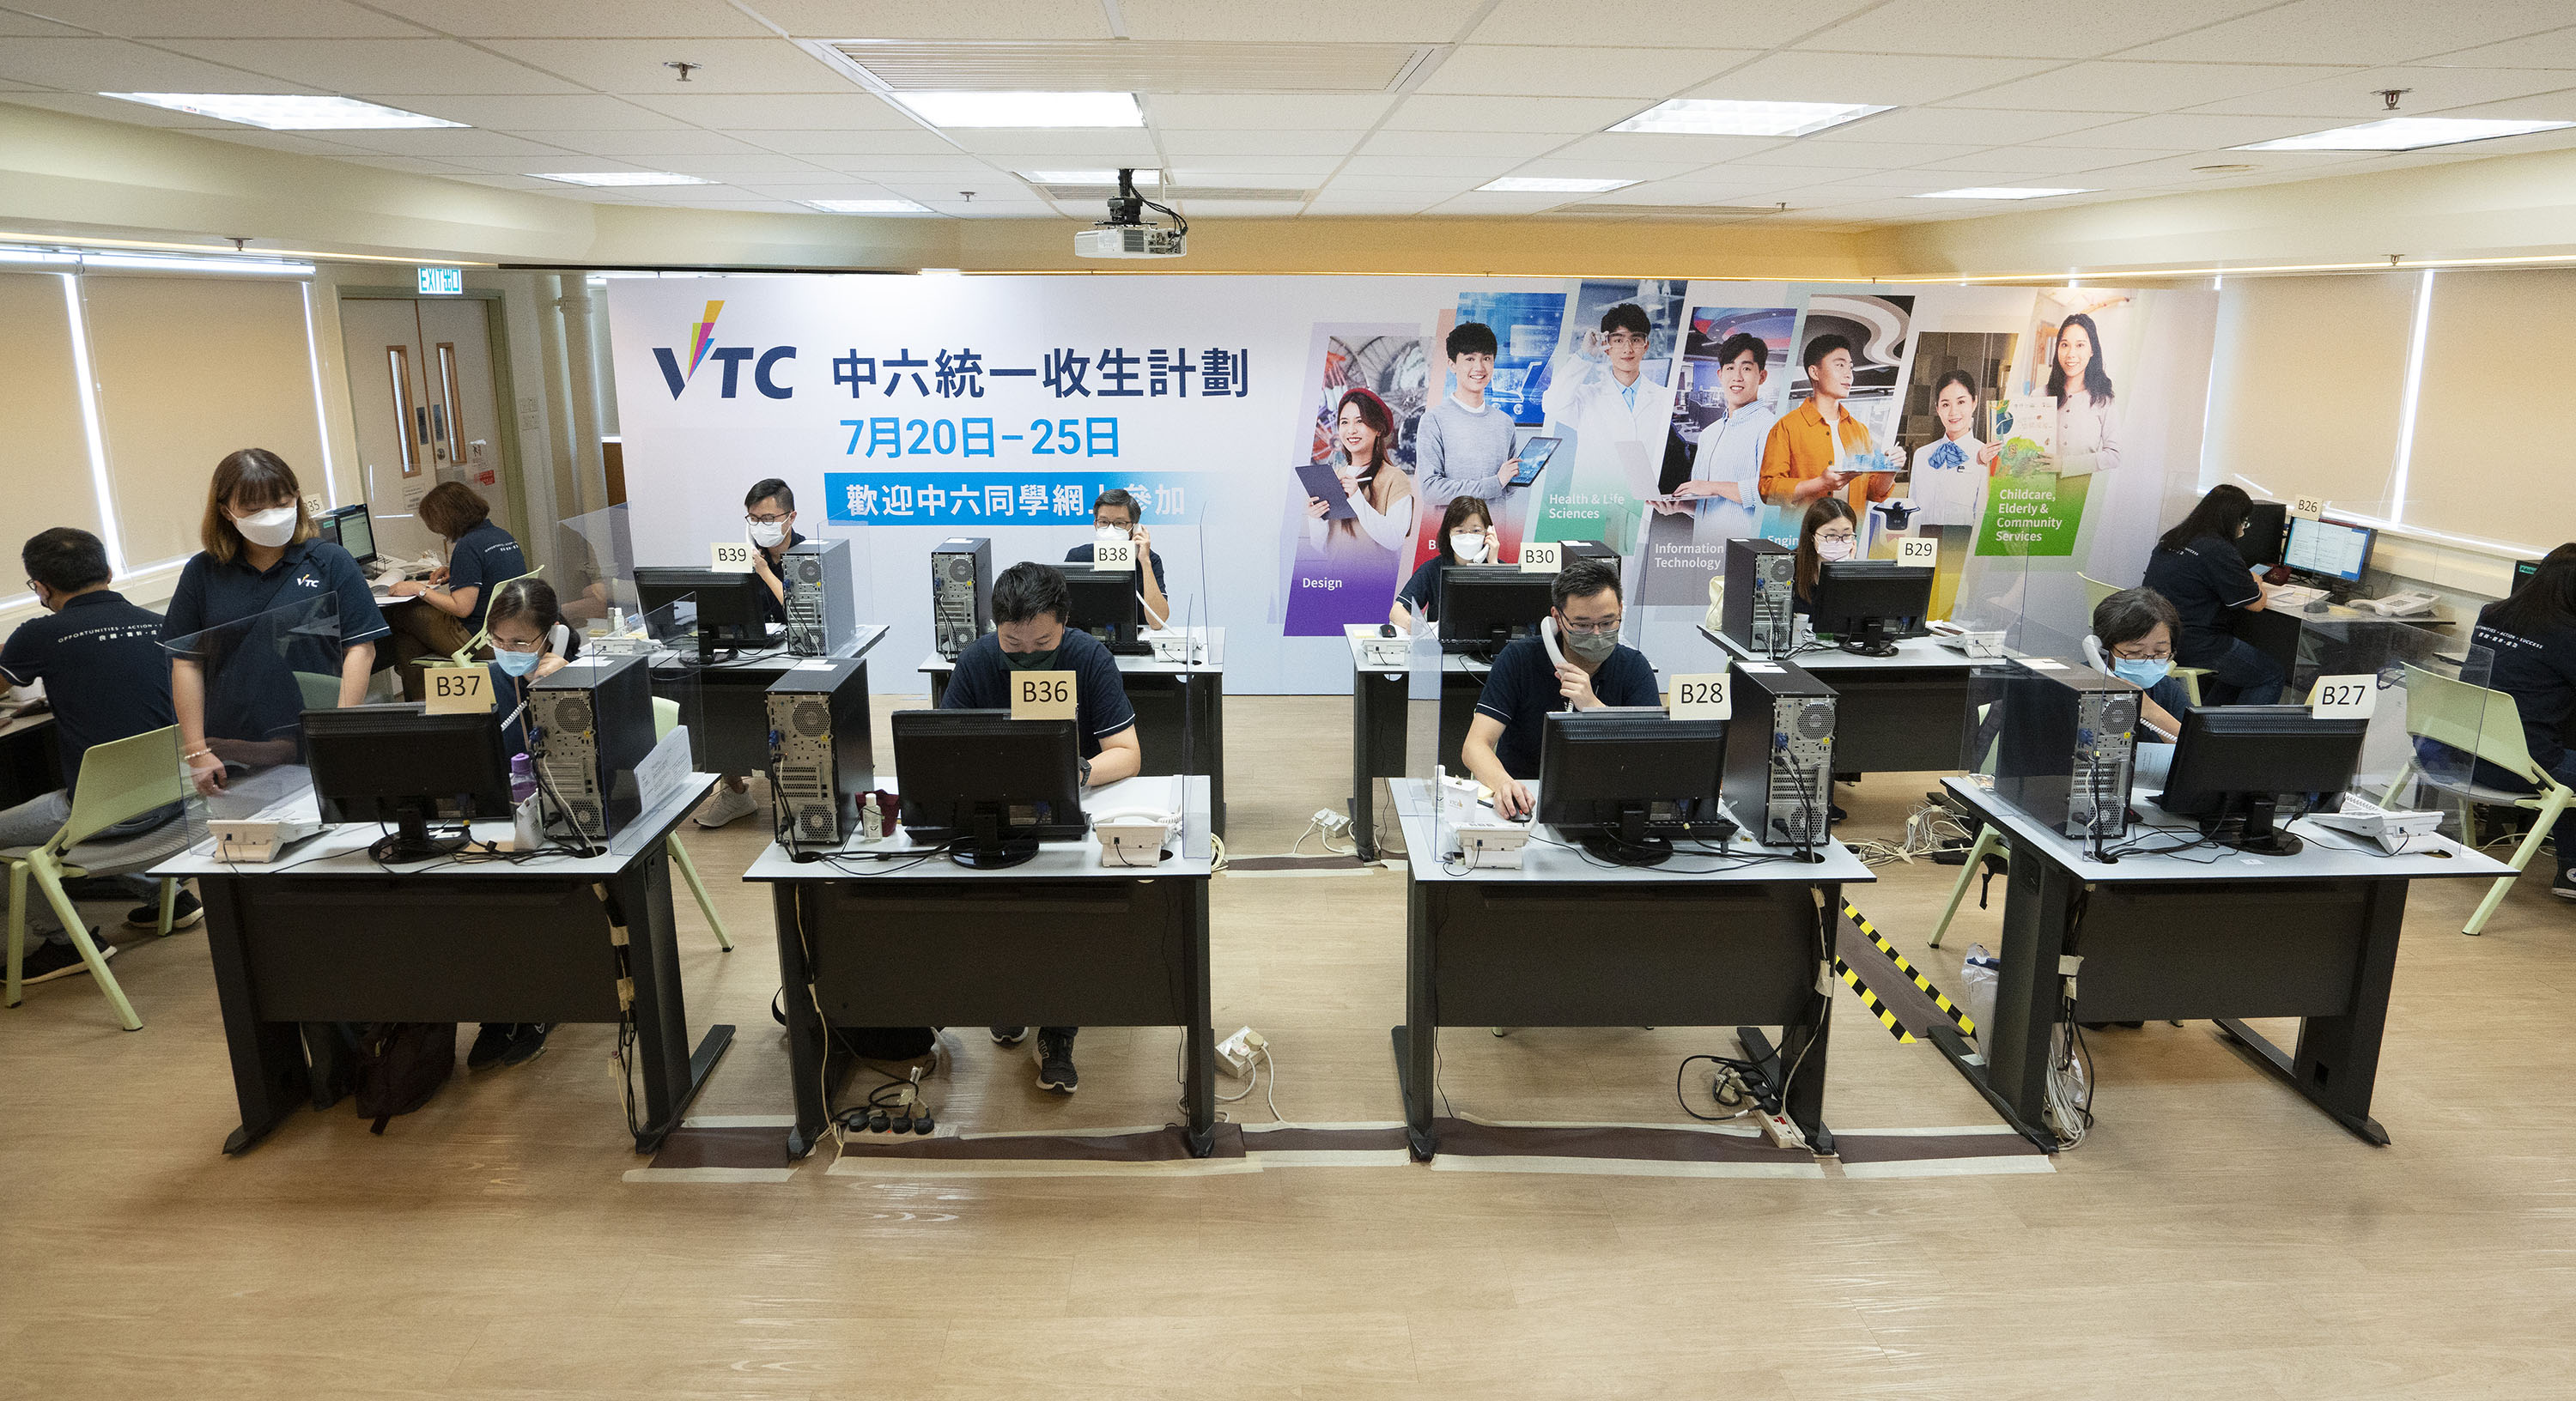 VTC统一收生计划 欢迎文凭试考生报读心仪课程